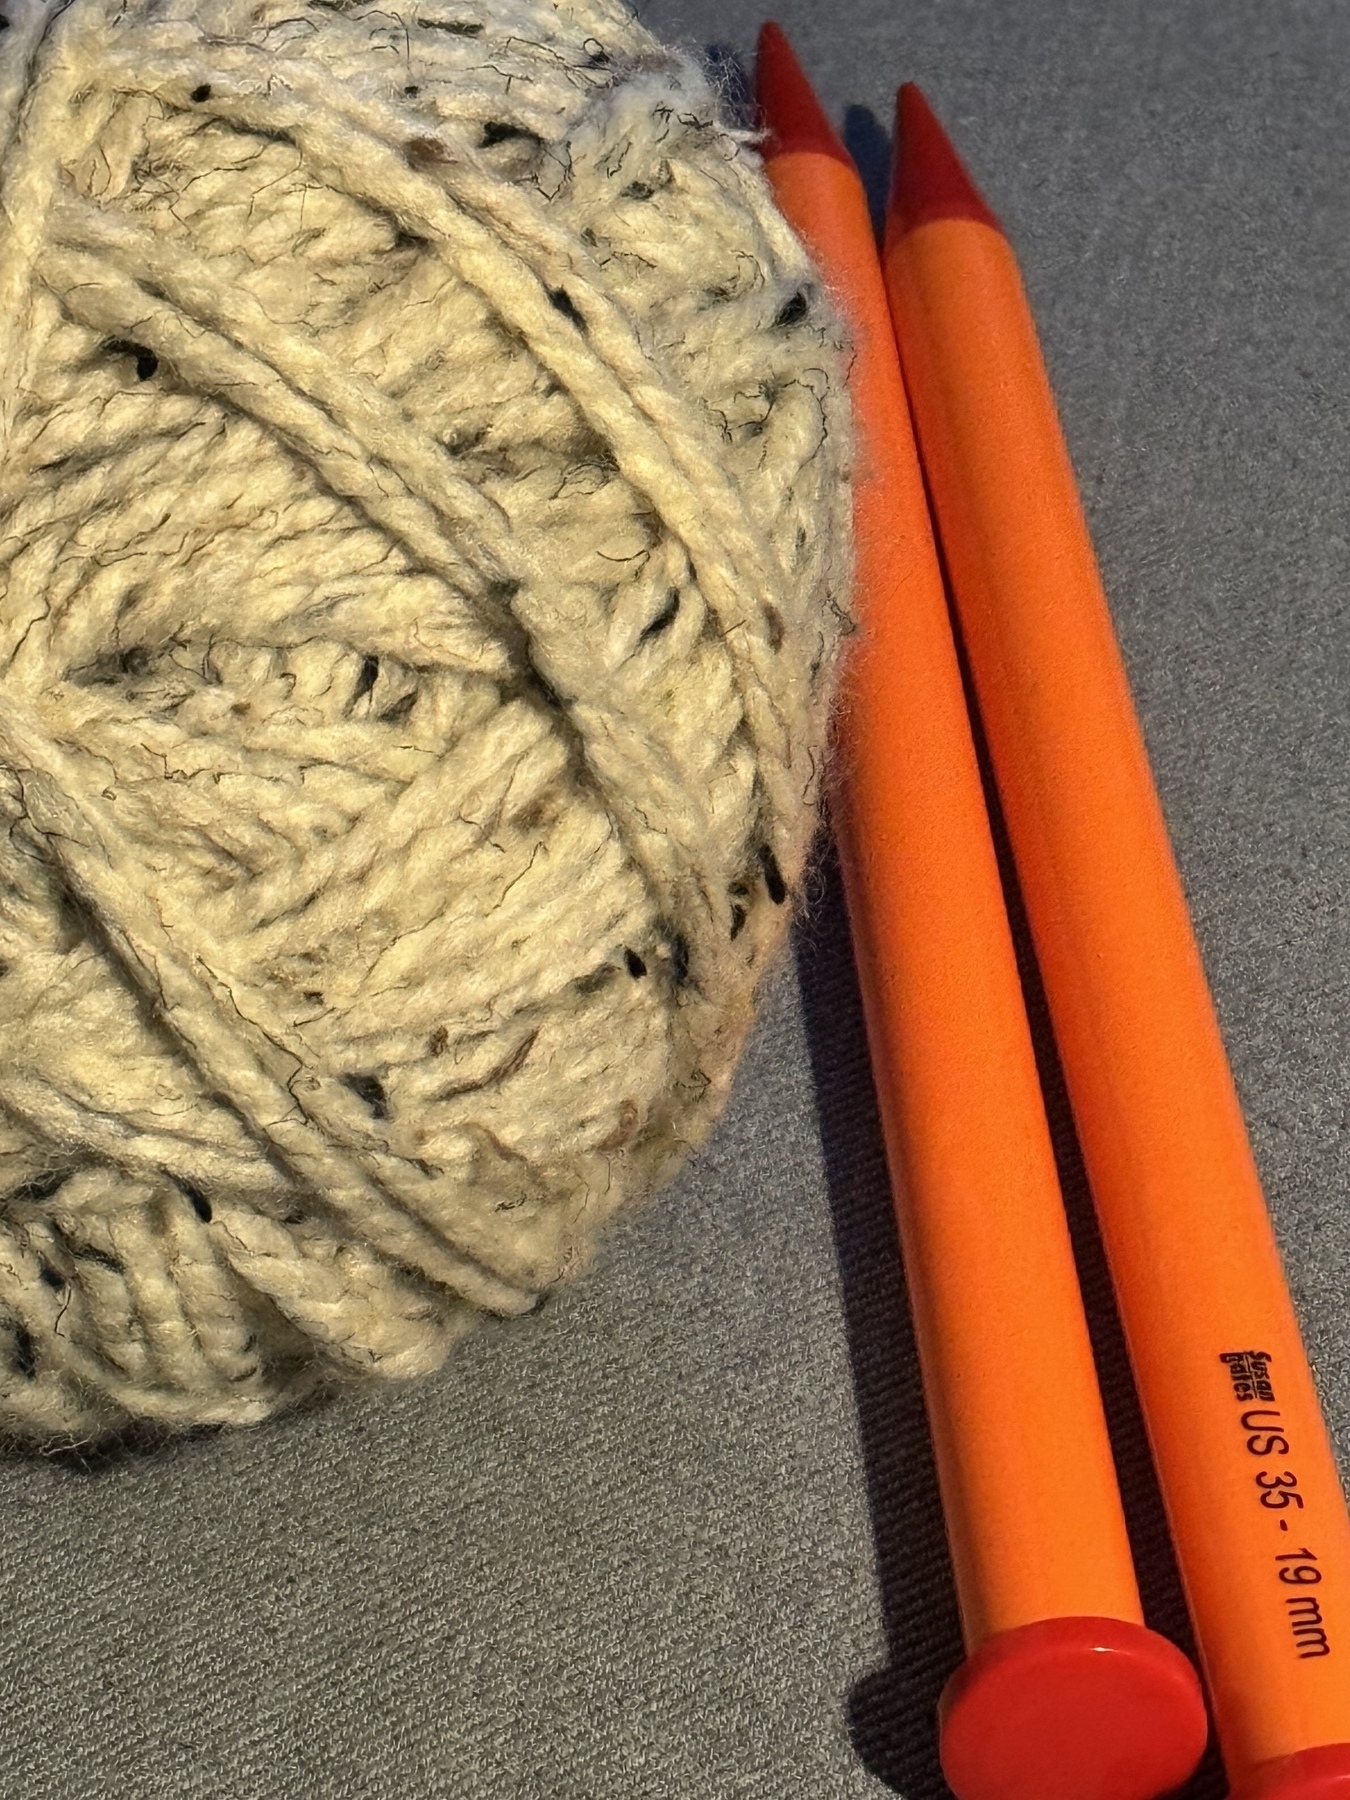 Ball of yarn next to two knitting needles. 